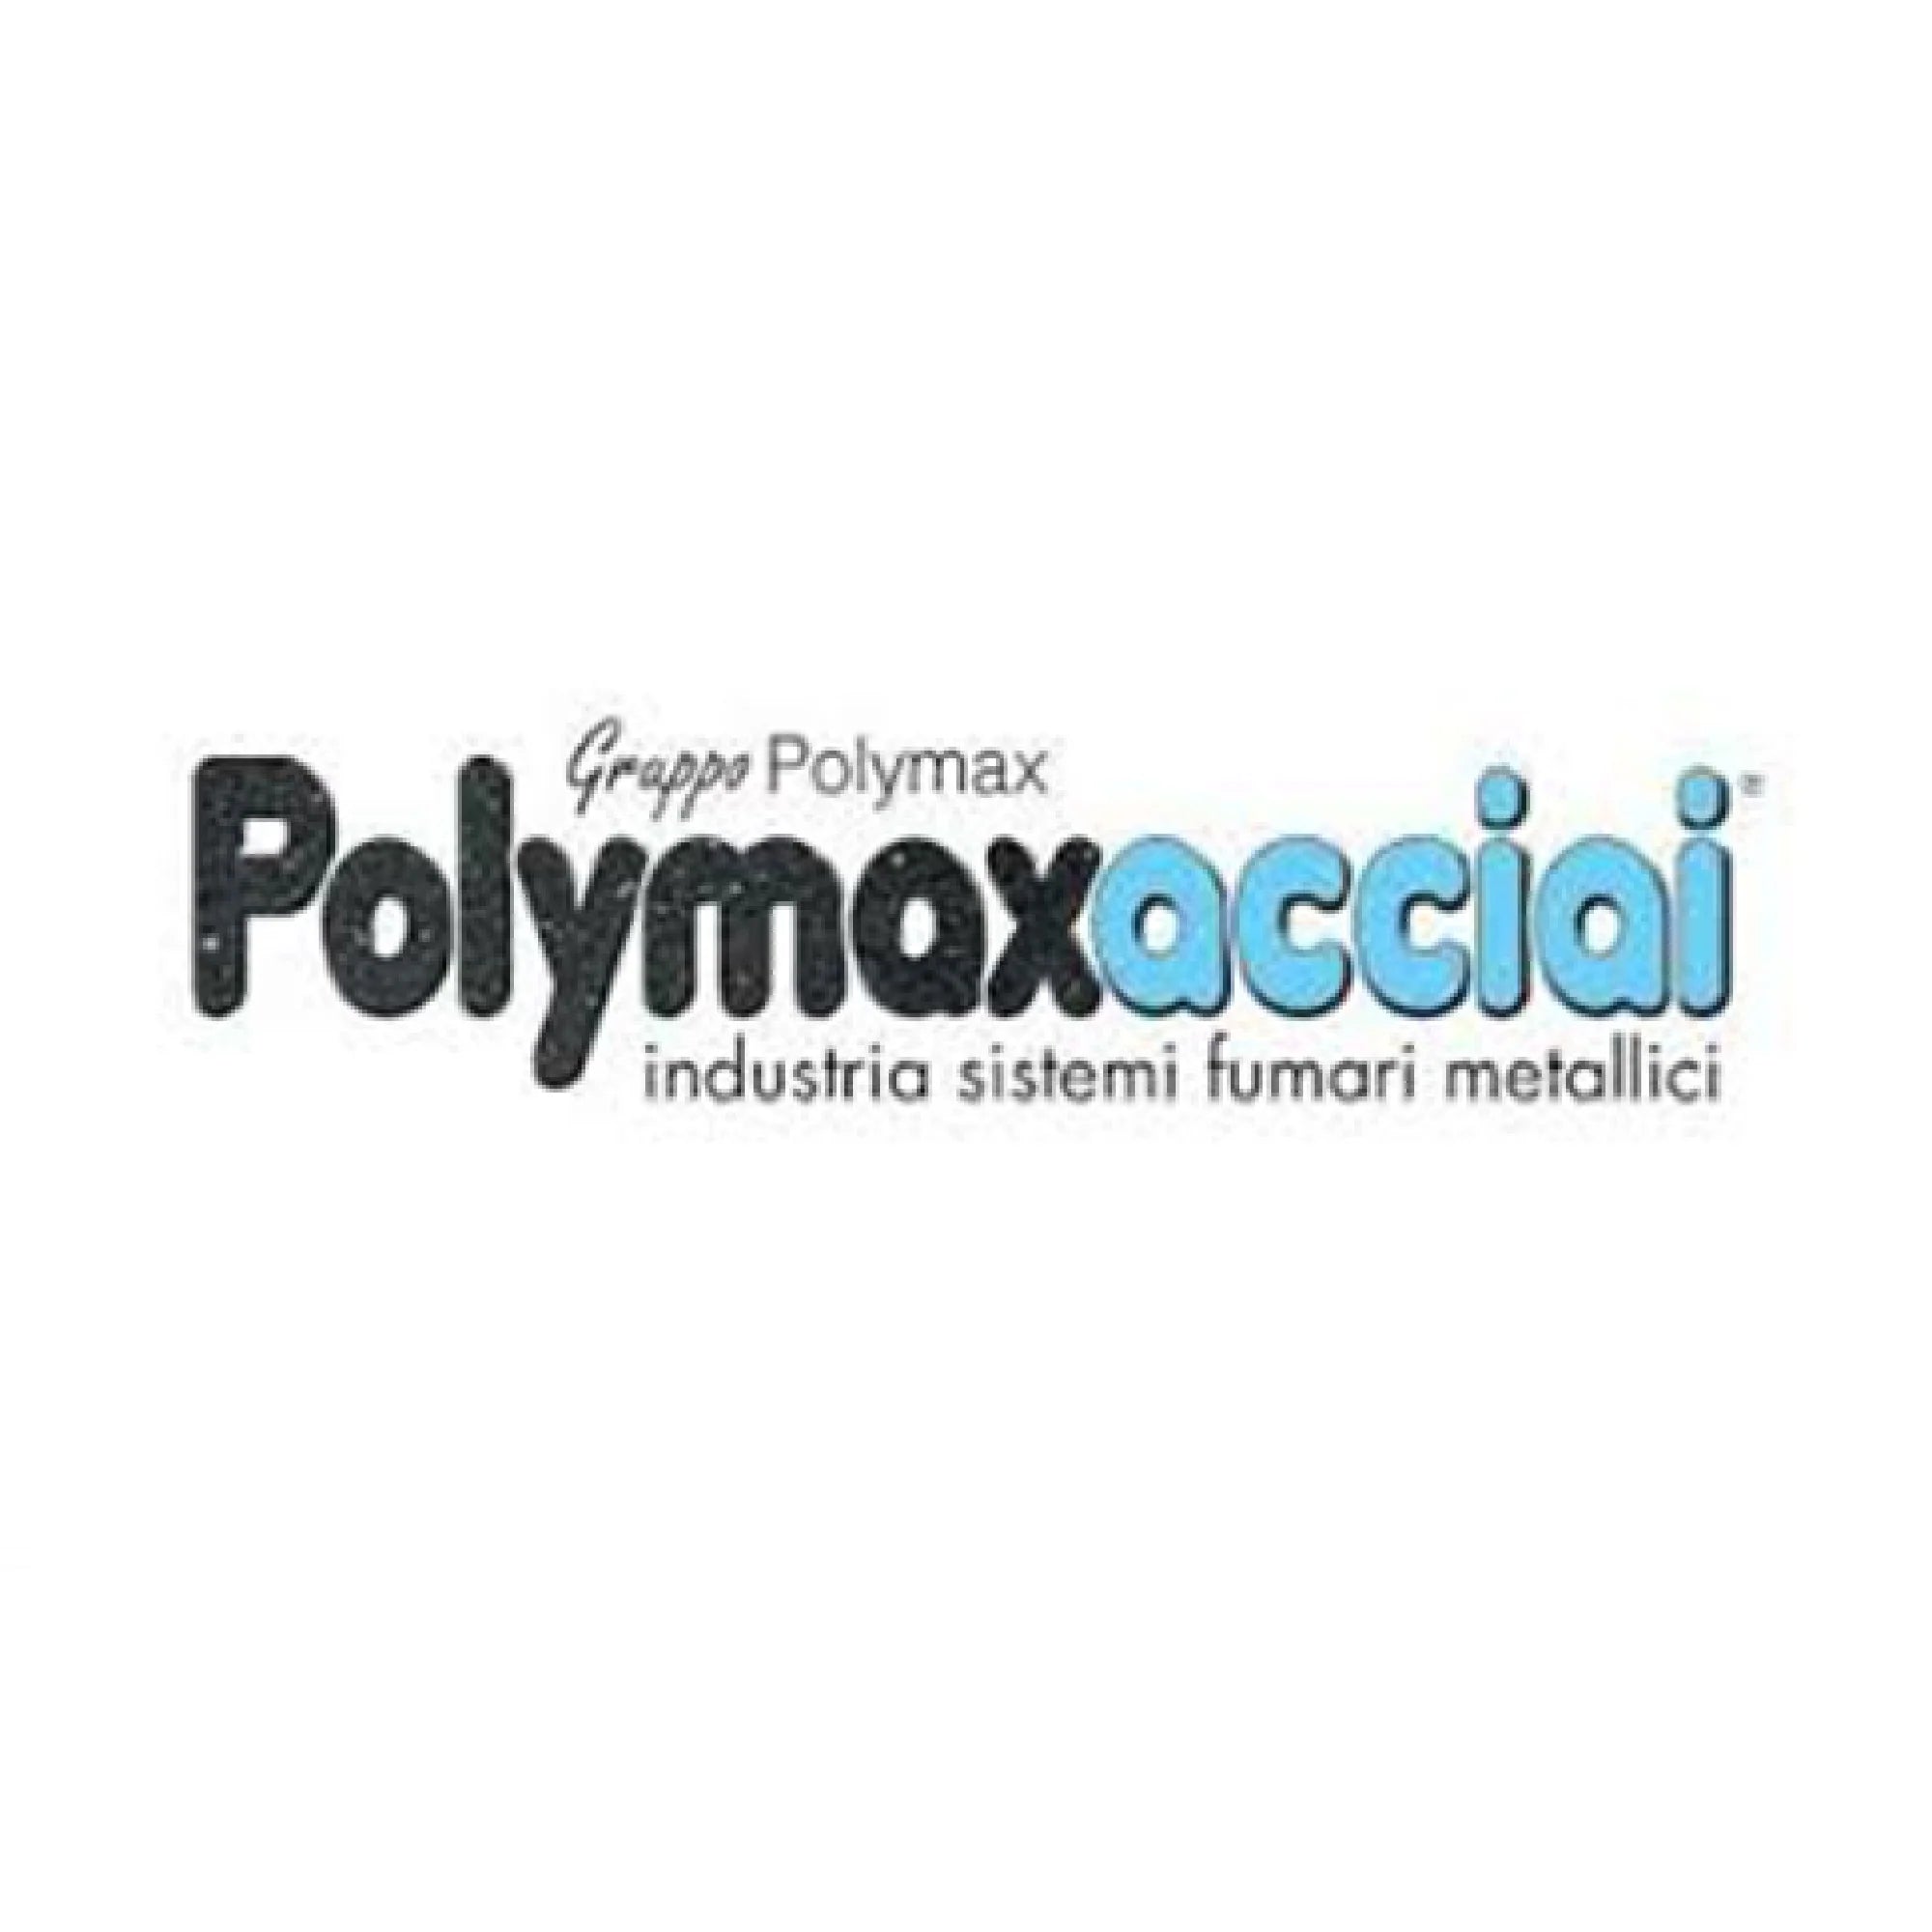 Polymaxacciai